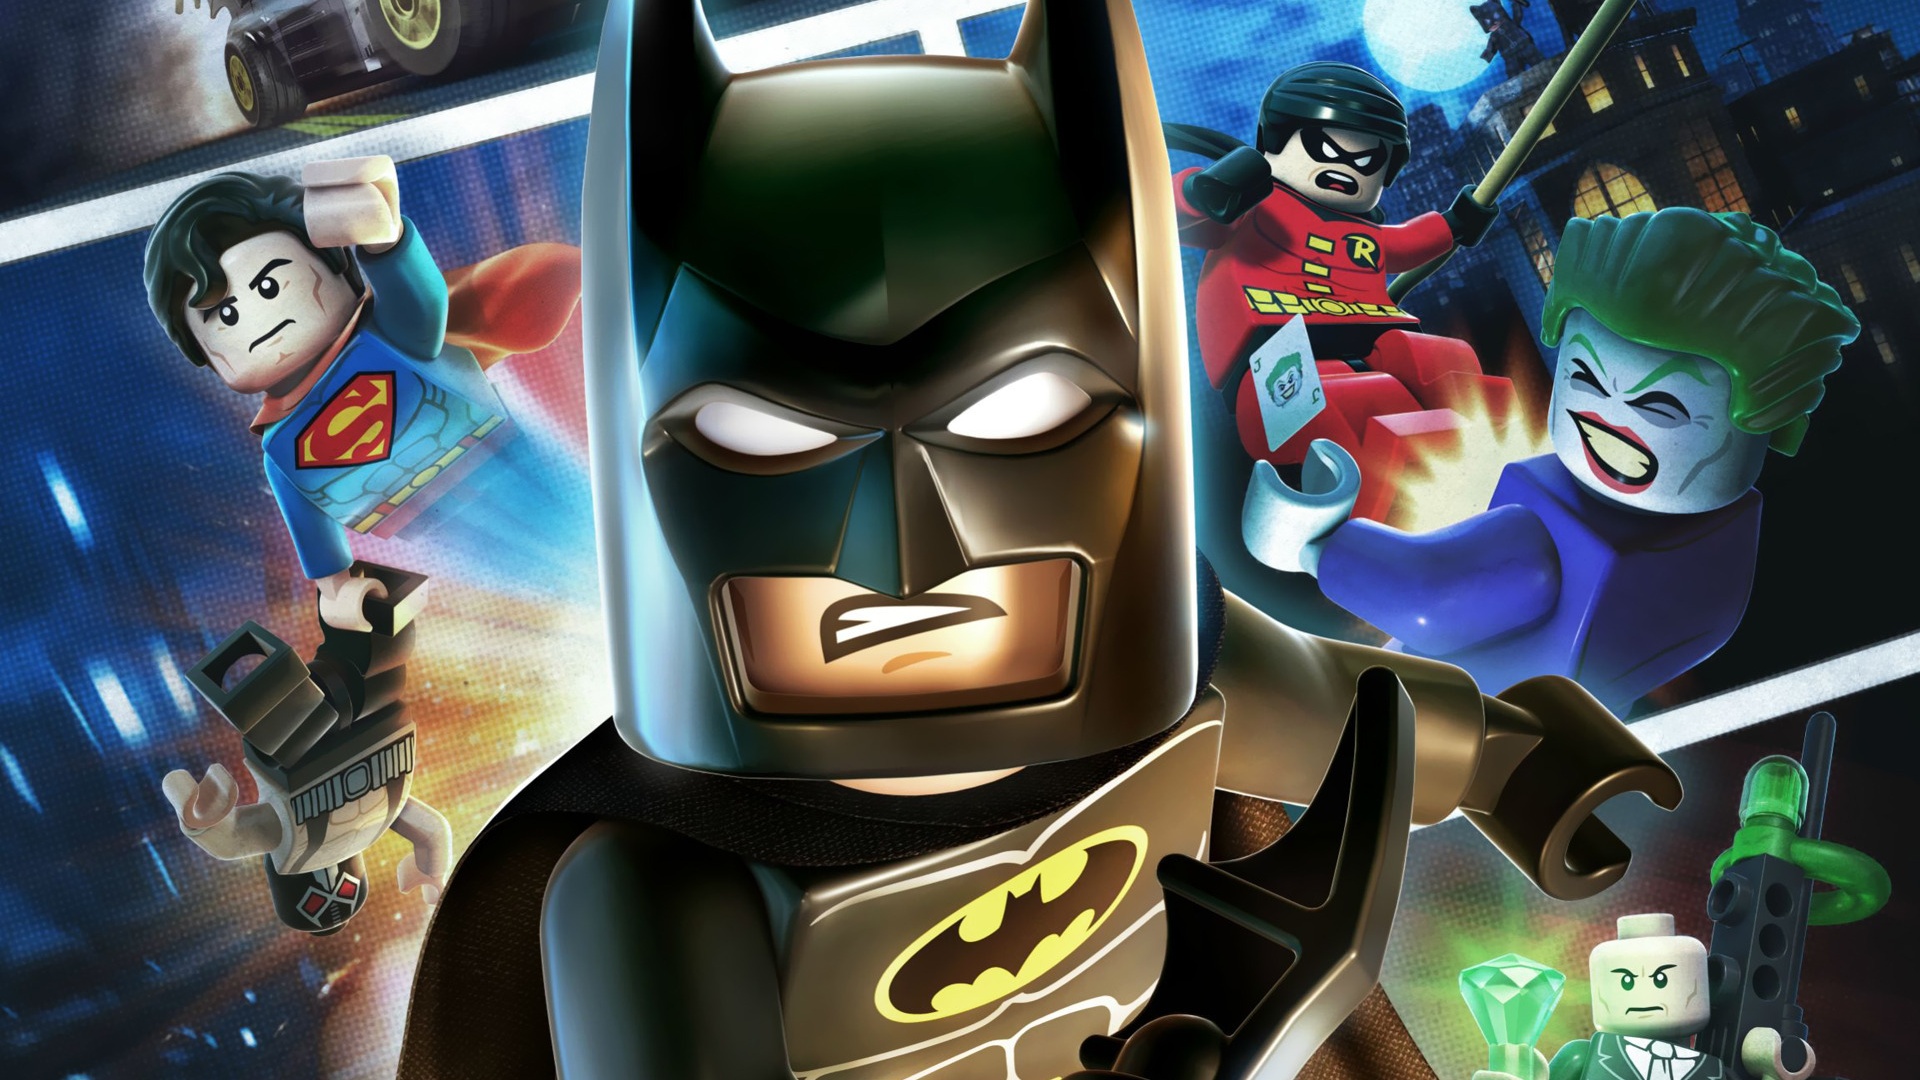 lego batman 2: dc super heroes, video game, lego